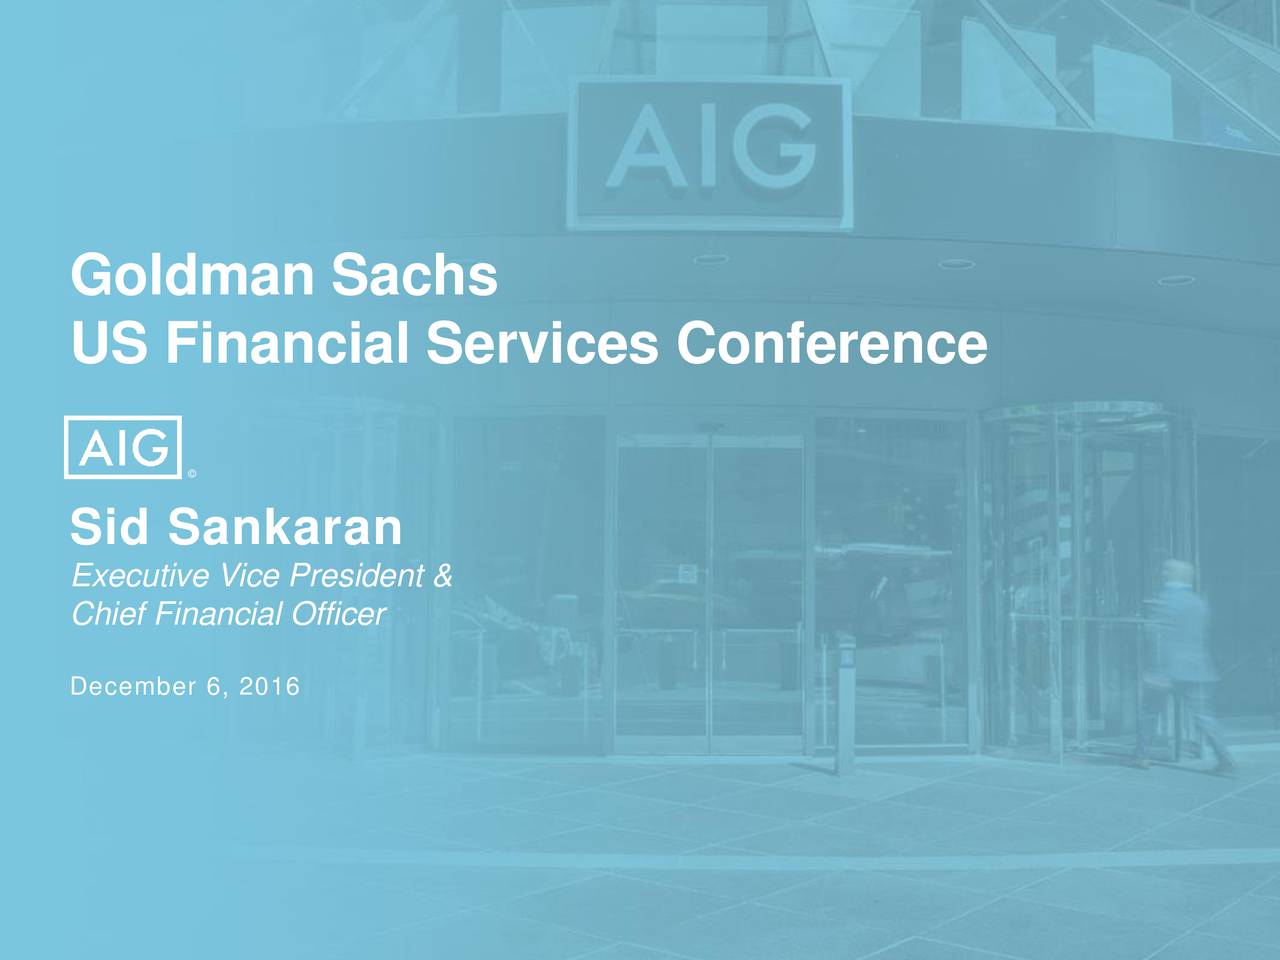 Goldman Sachs U.S. Financial Services Conference Slides (NYSEAIG